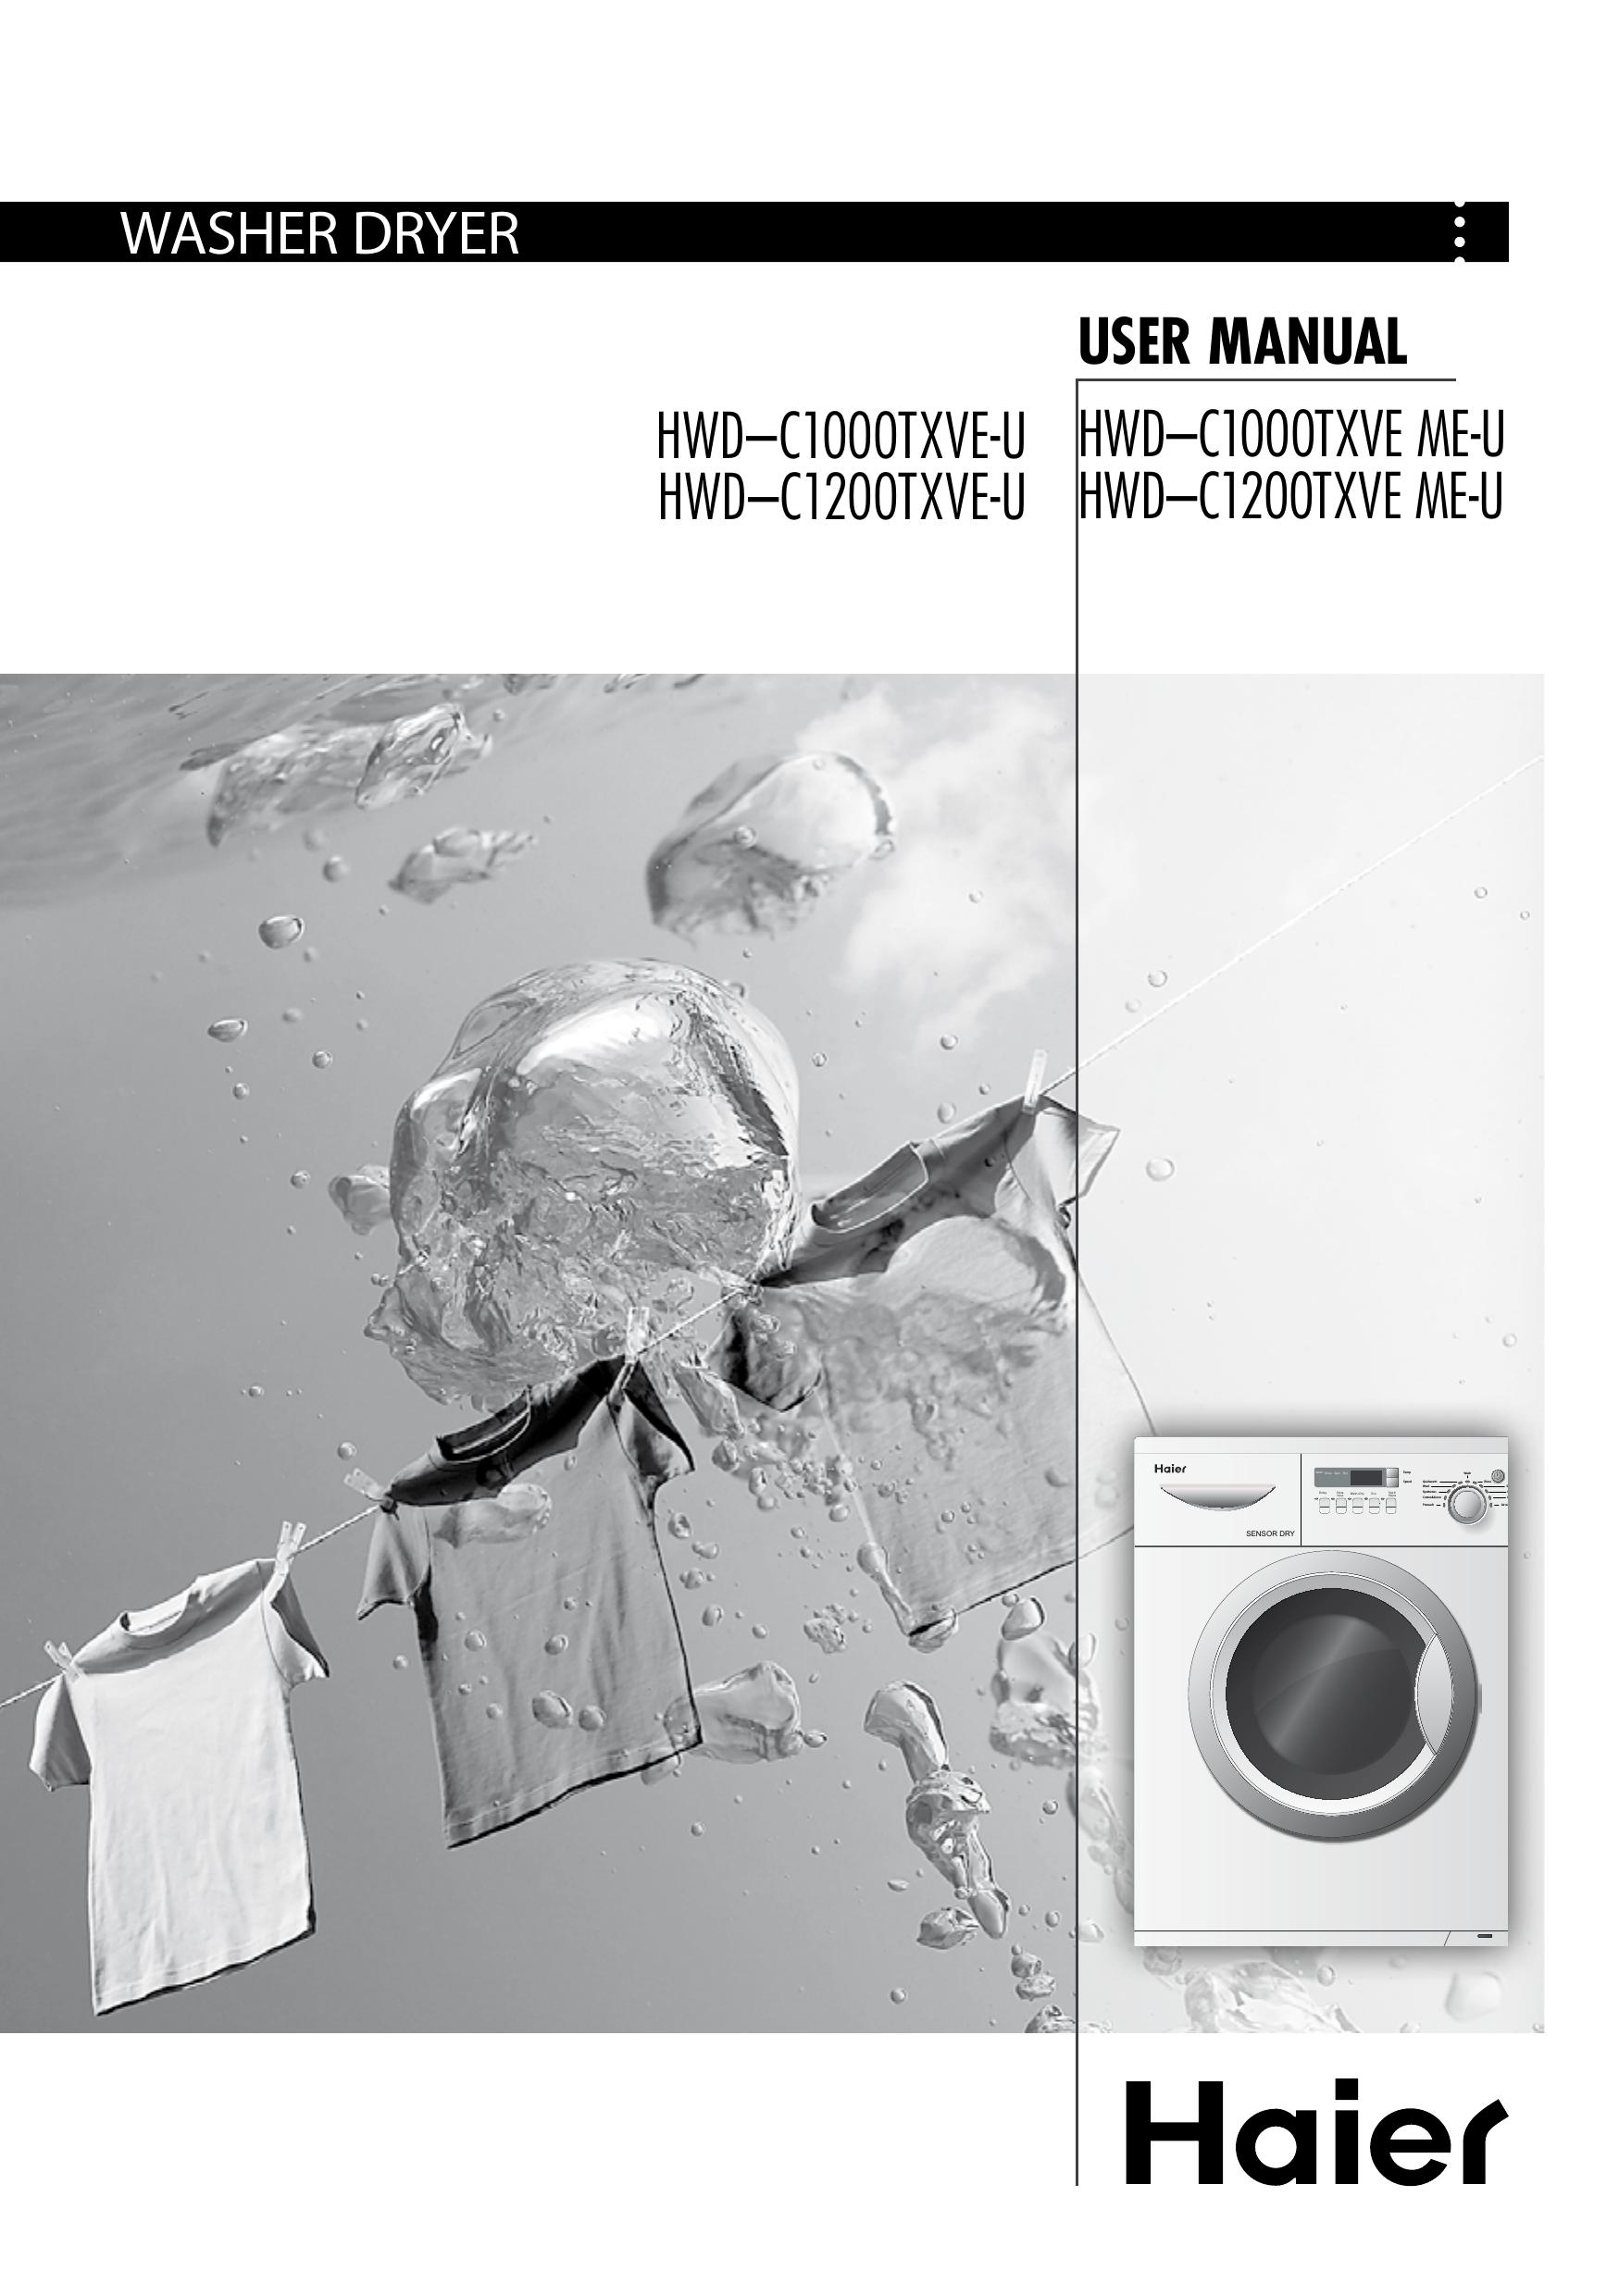 Haier HWDC1200TXVE-U Washer/Dryer User Manual